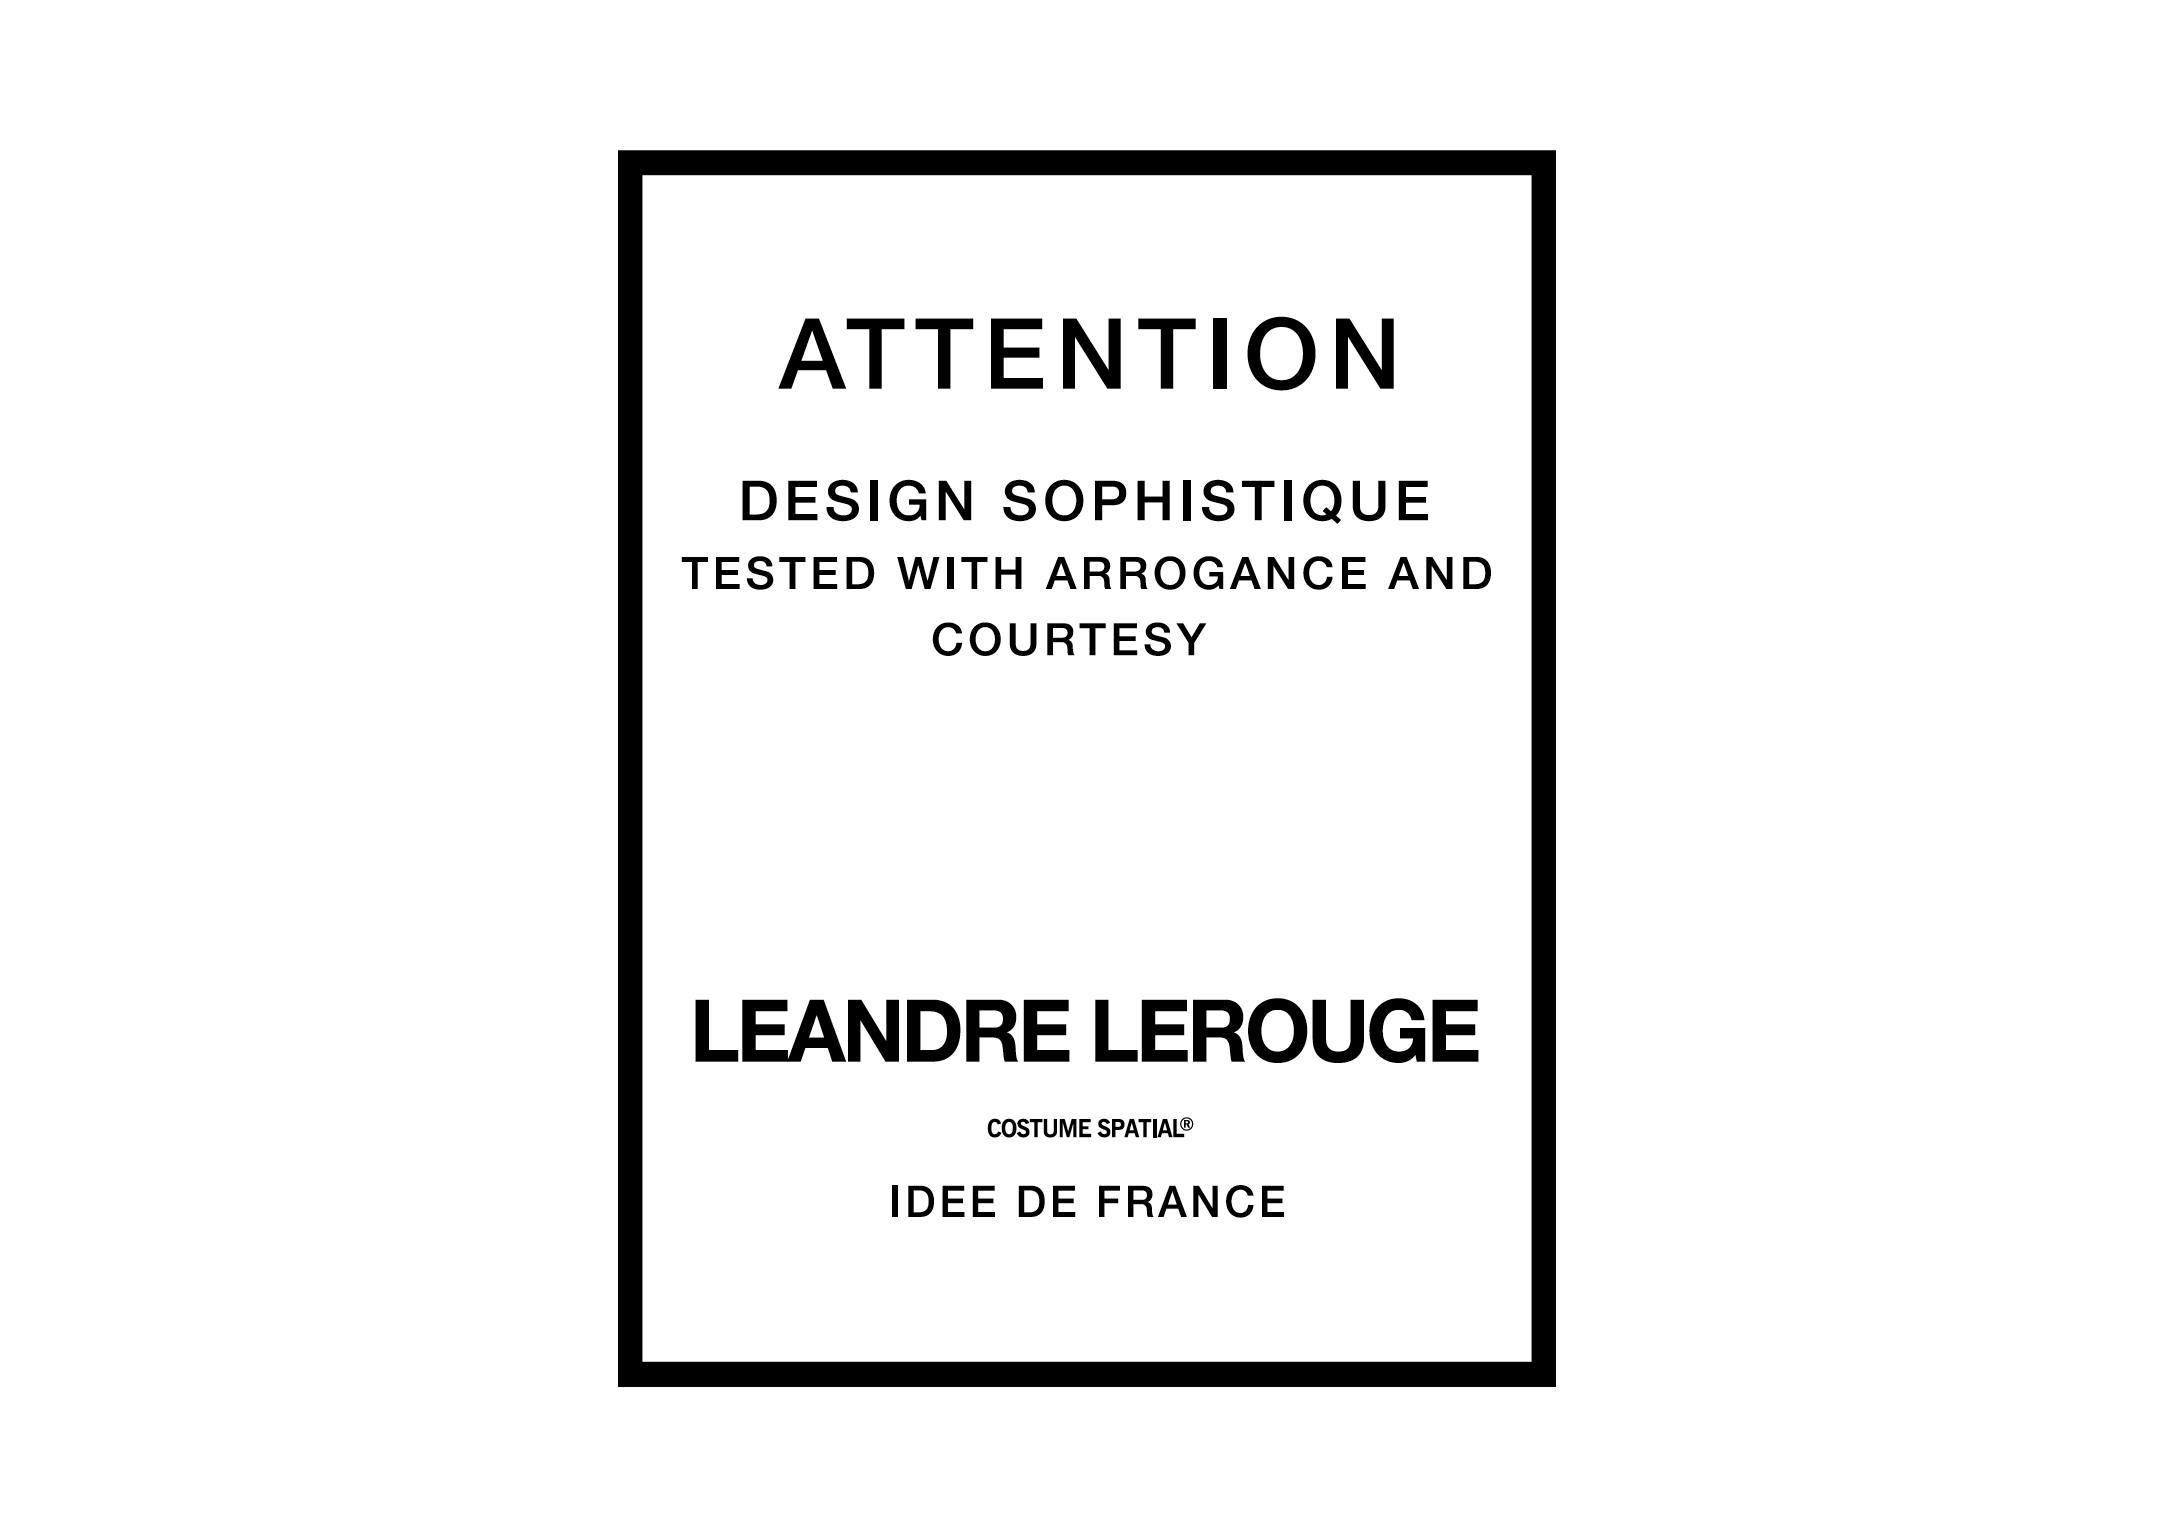 text poster advertisement label paper interior design indoors